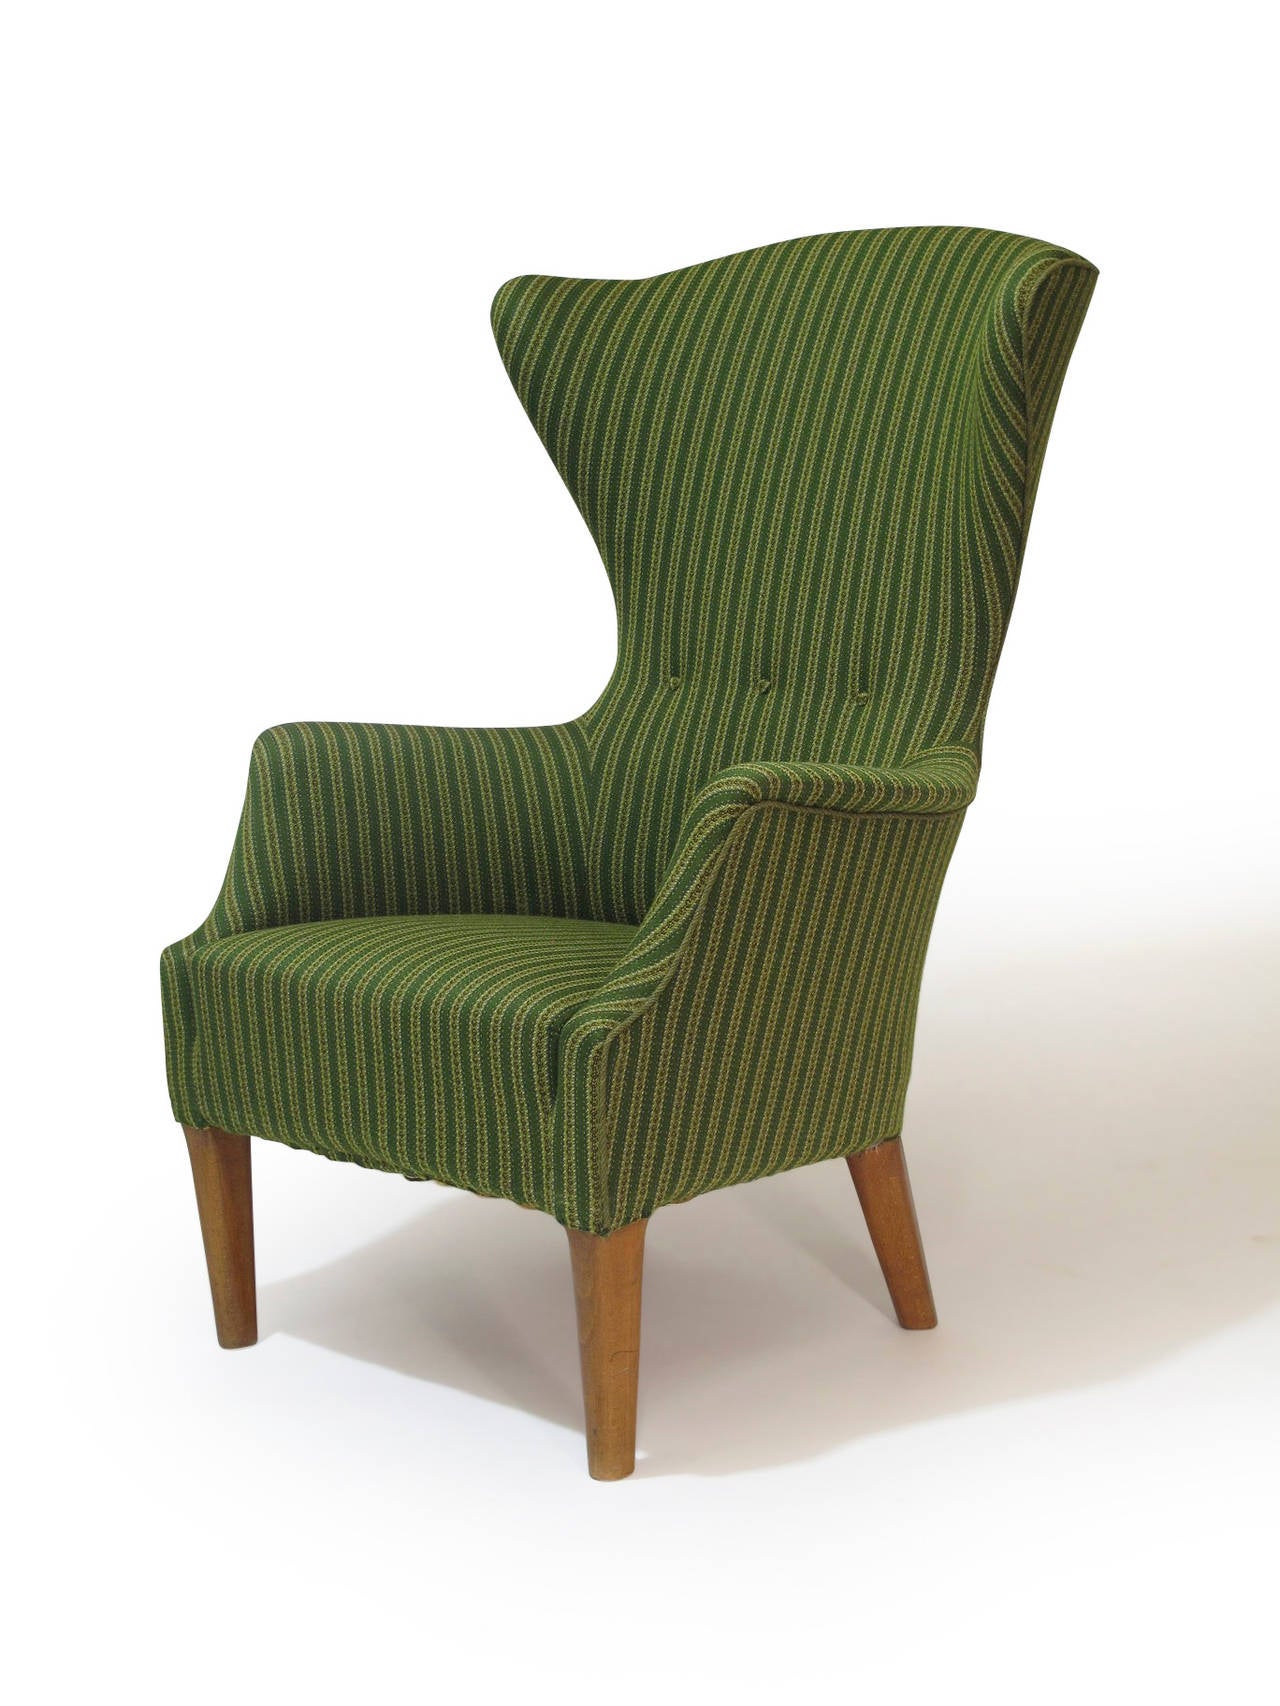 Hand-Woven 1930s Danish Highback Chair